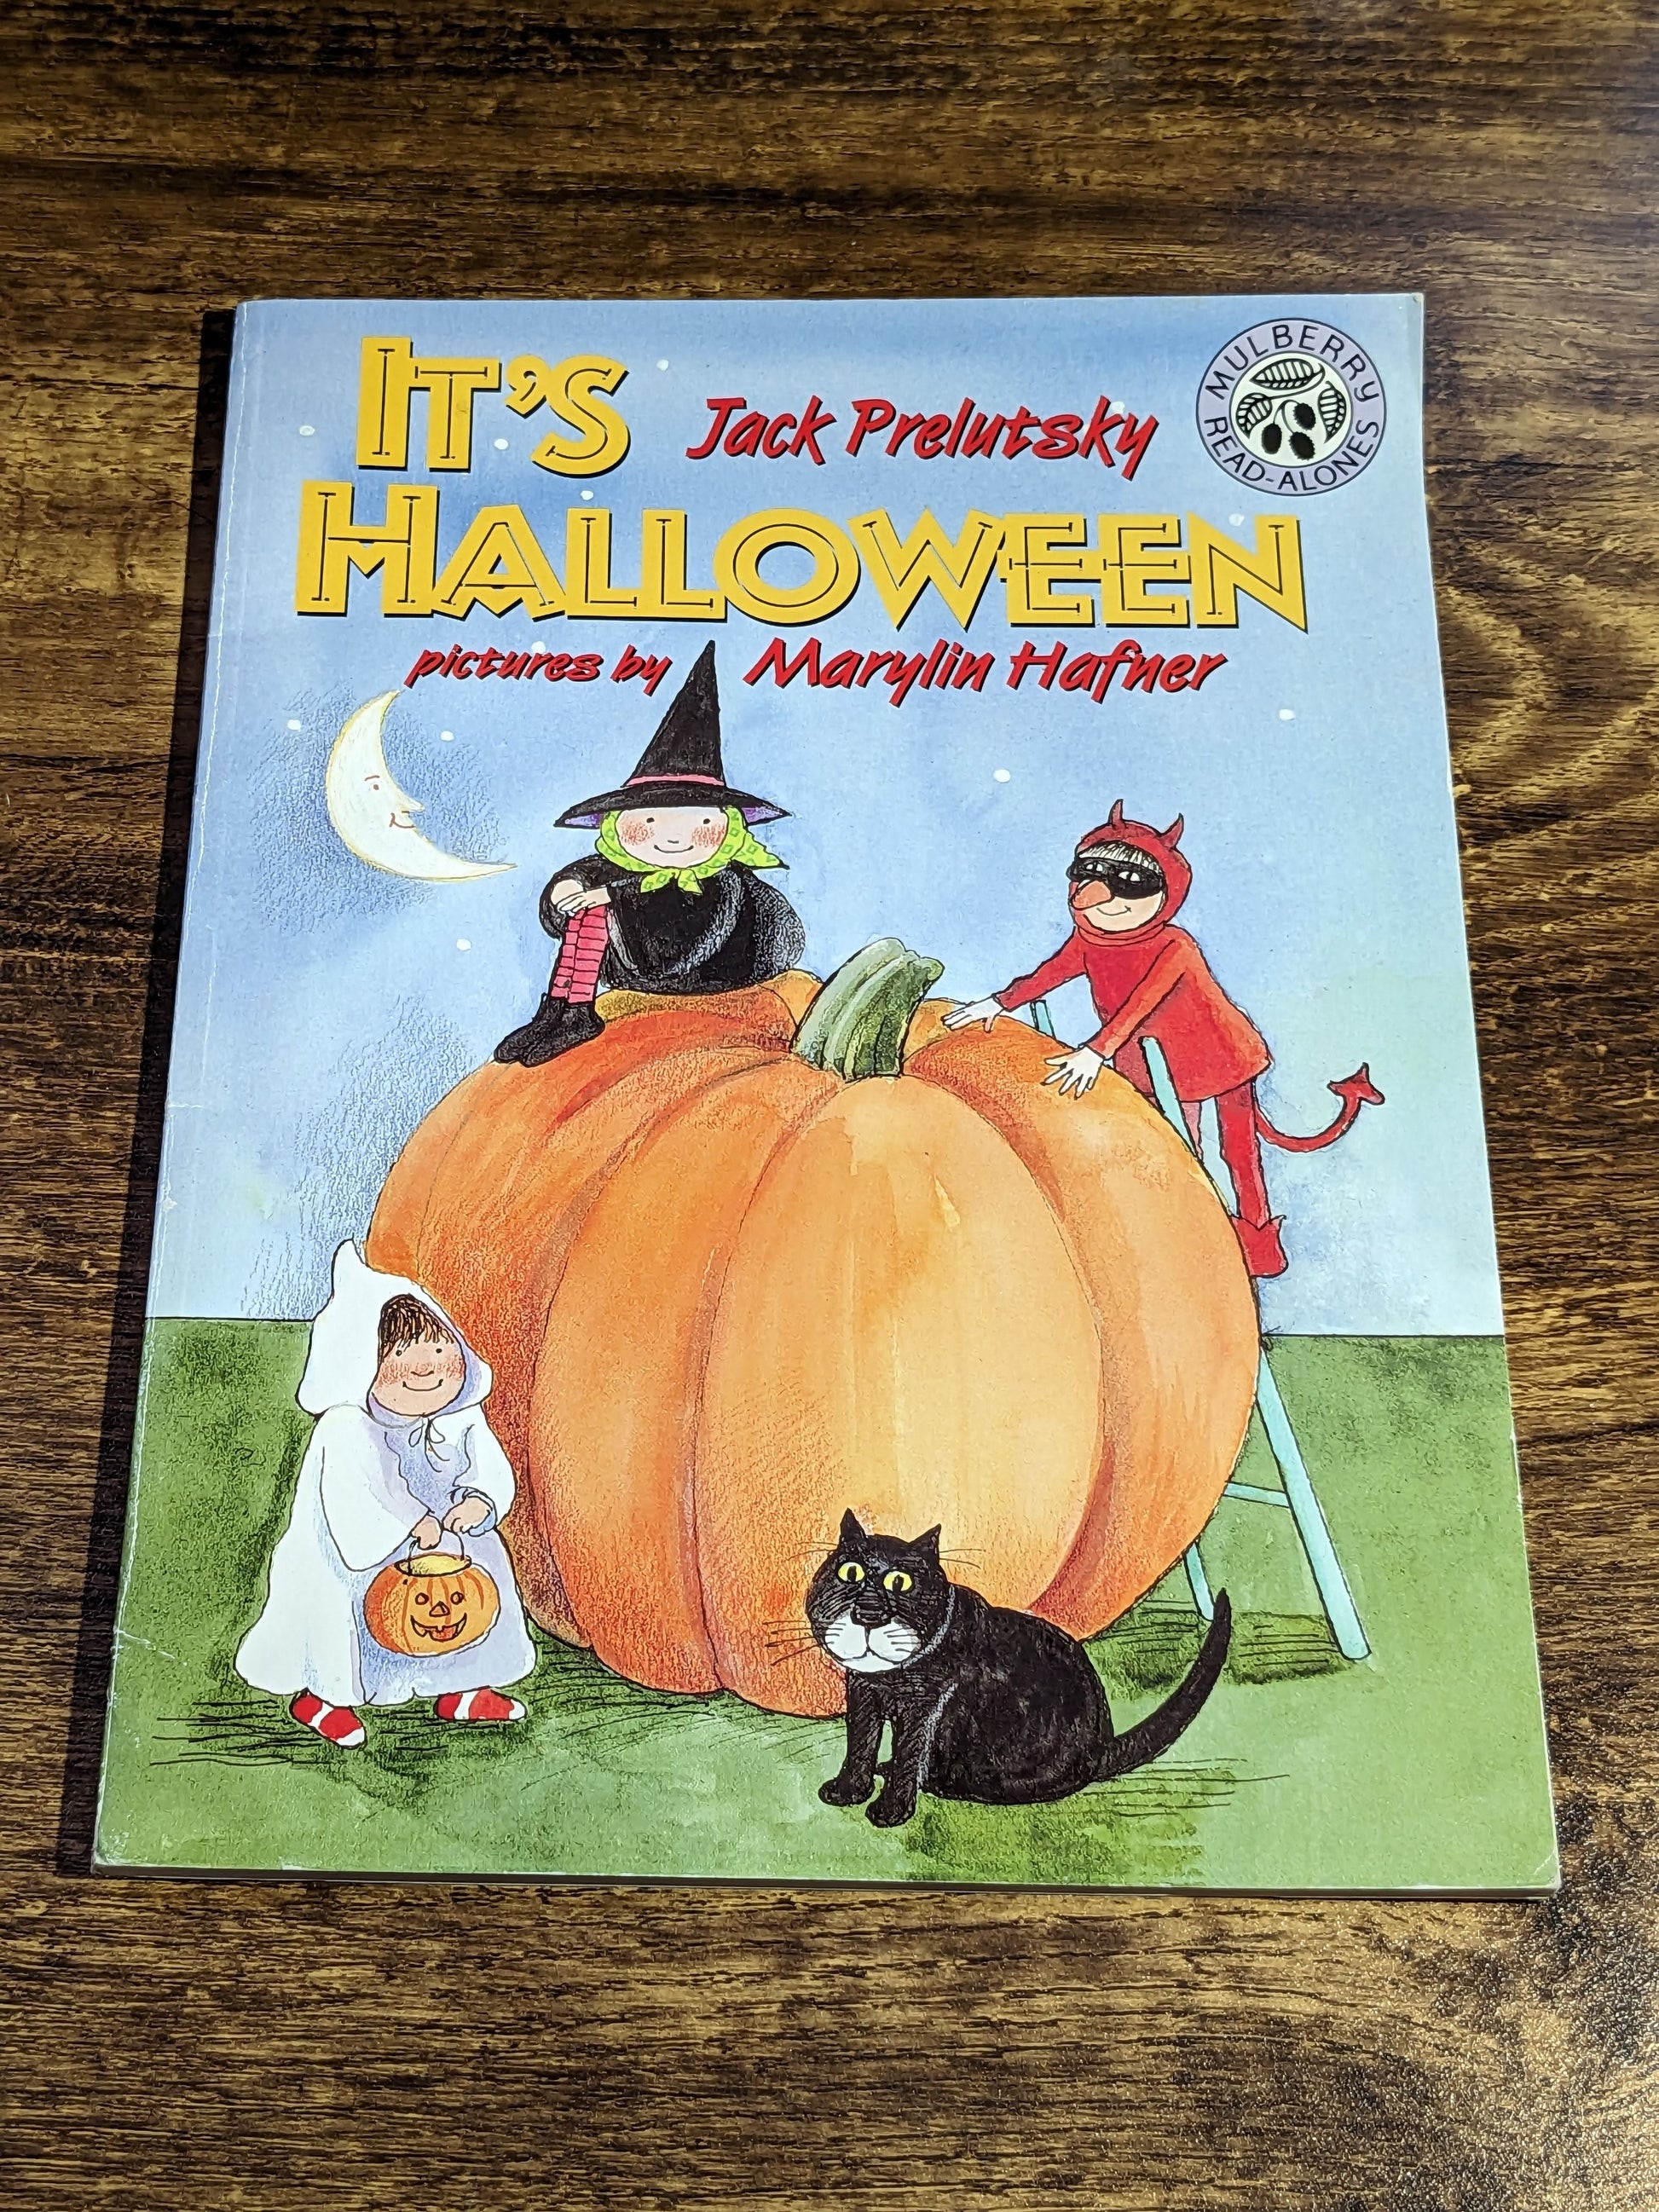 Its Halloween - Spooky Holiday Poems & Illustrations by Jack Prelutsky - Children's Book - Asylum Books